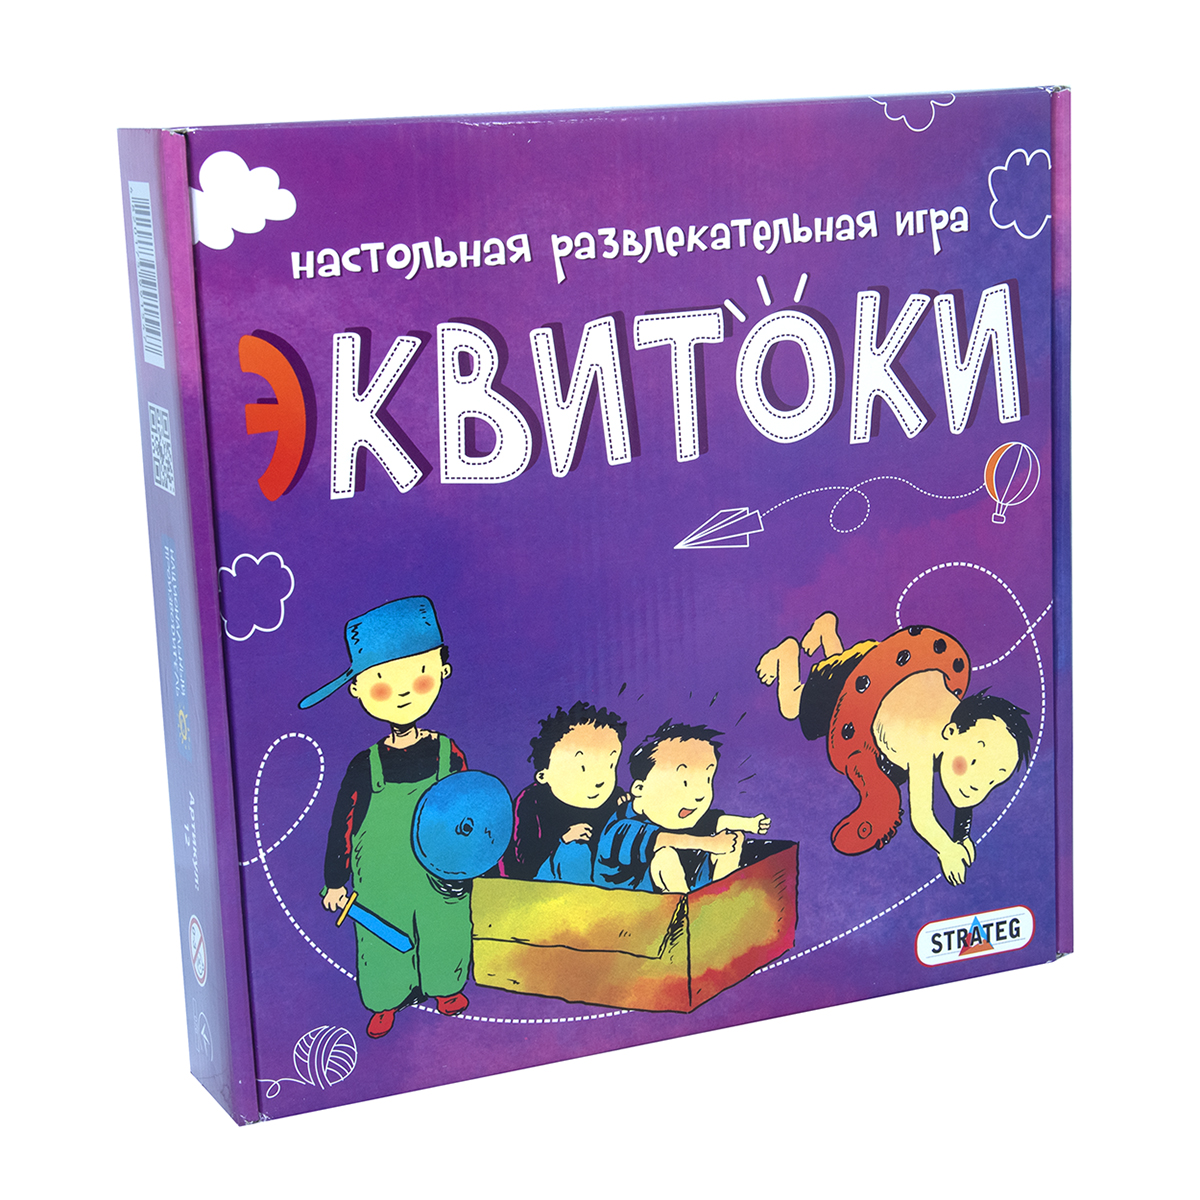 Game "Equitoki, 112 cards" (rus.) (12)